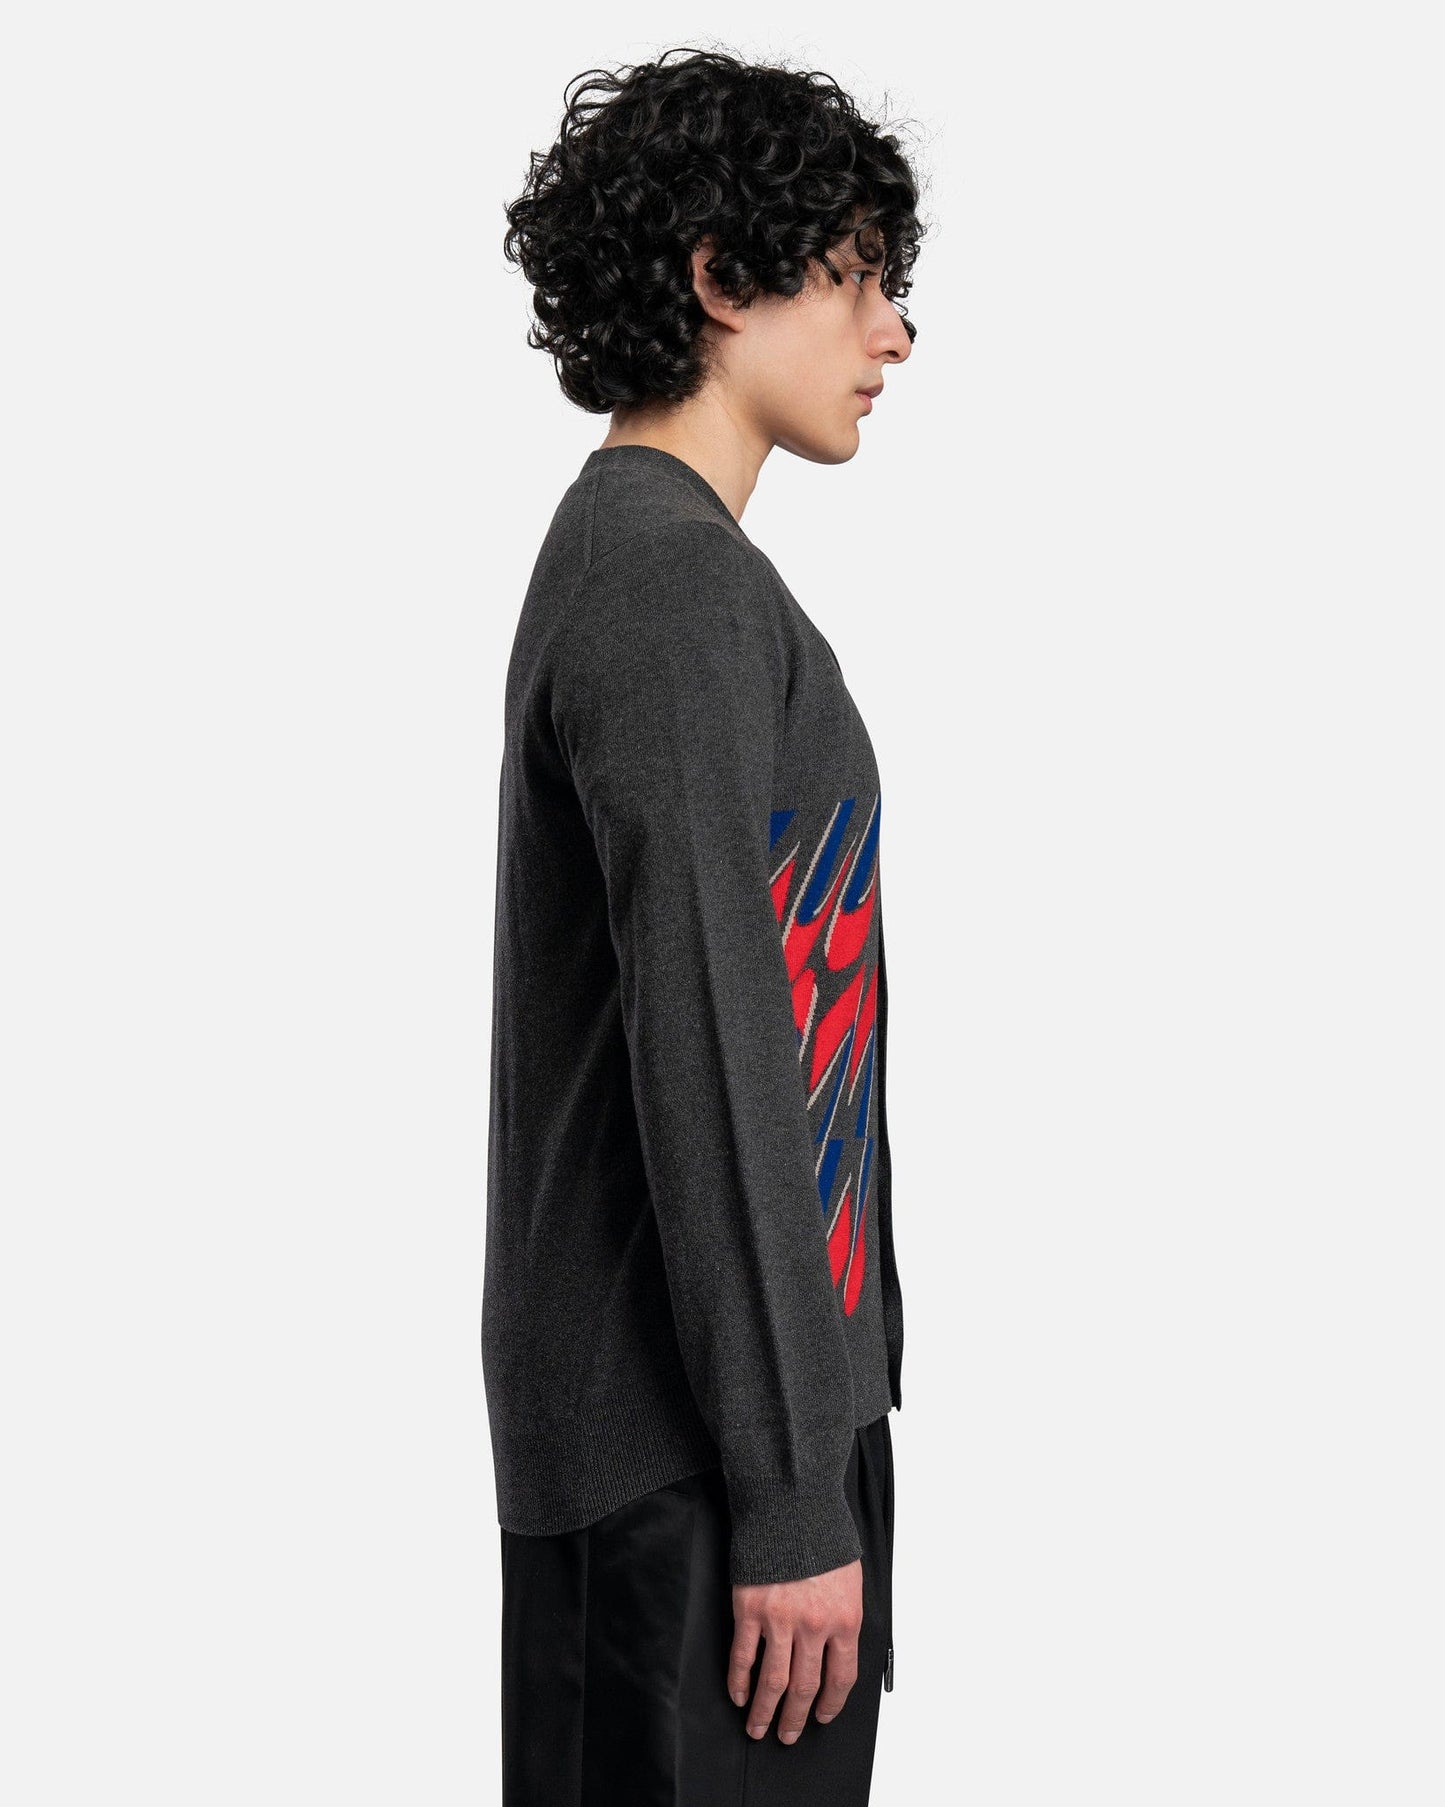 Comme des Garcons Homme Deux Men's Sweater Pattern-Knit Wool Cardigan in Dark Grey